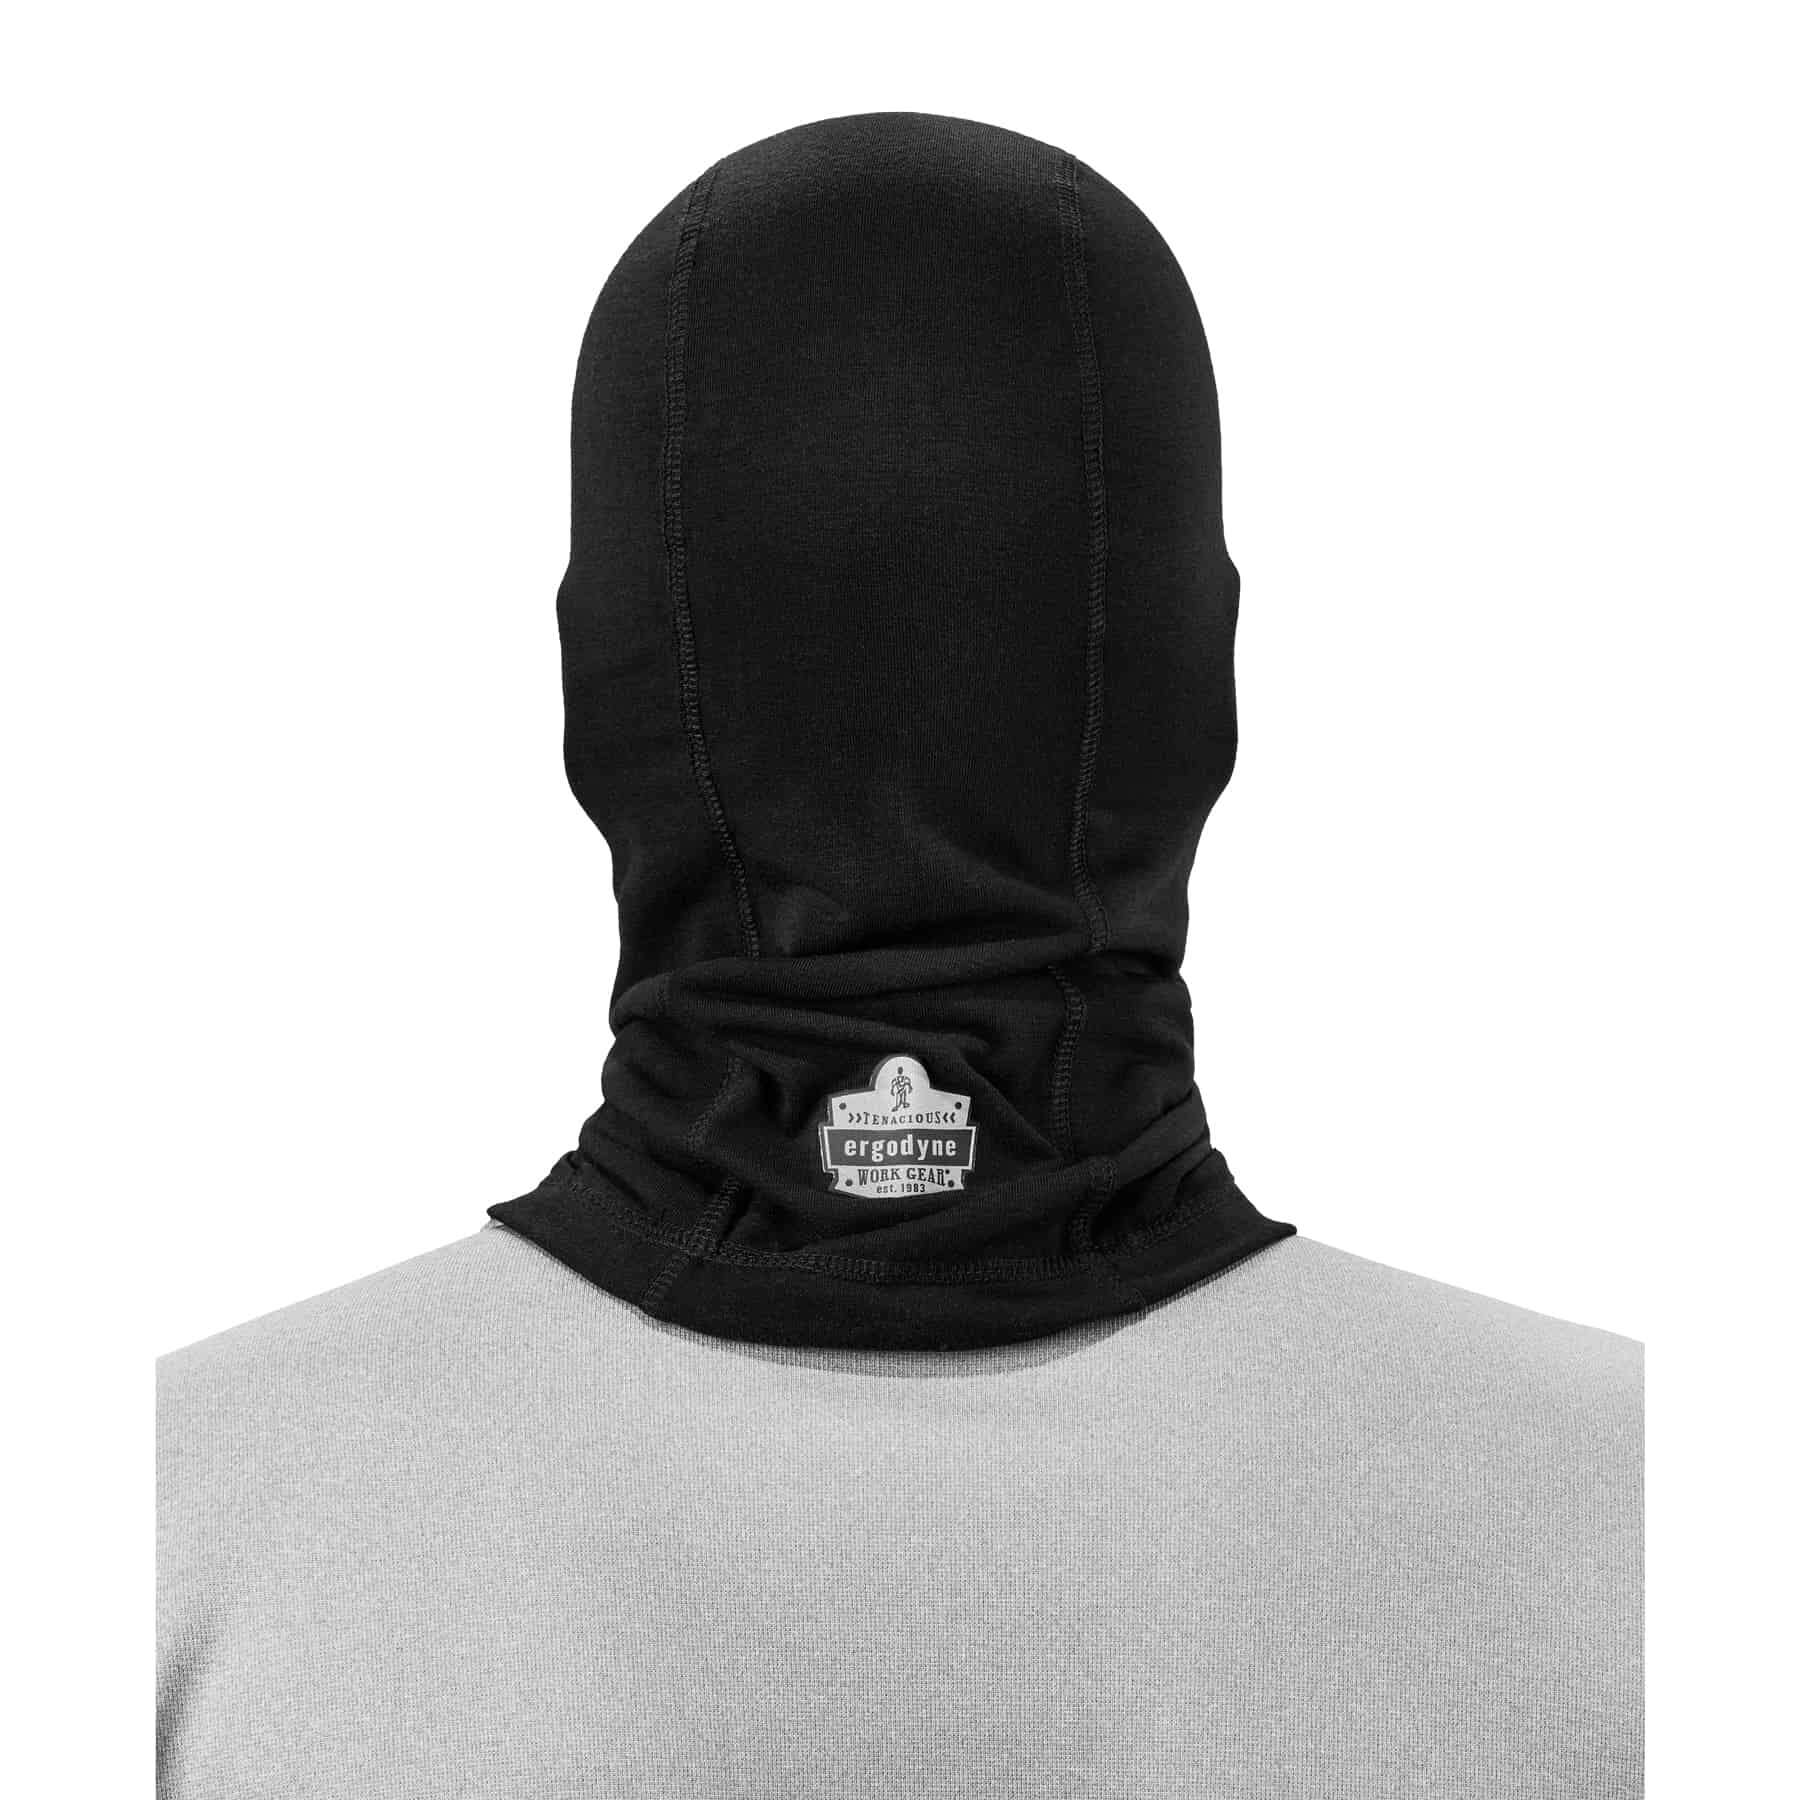 Wind-Resistant Face Mask Ergodyne N-Ferno Grey/ Black Winter Ski Mask Balaclava 